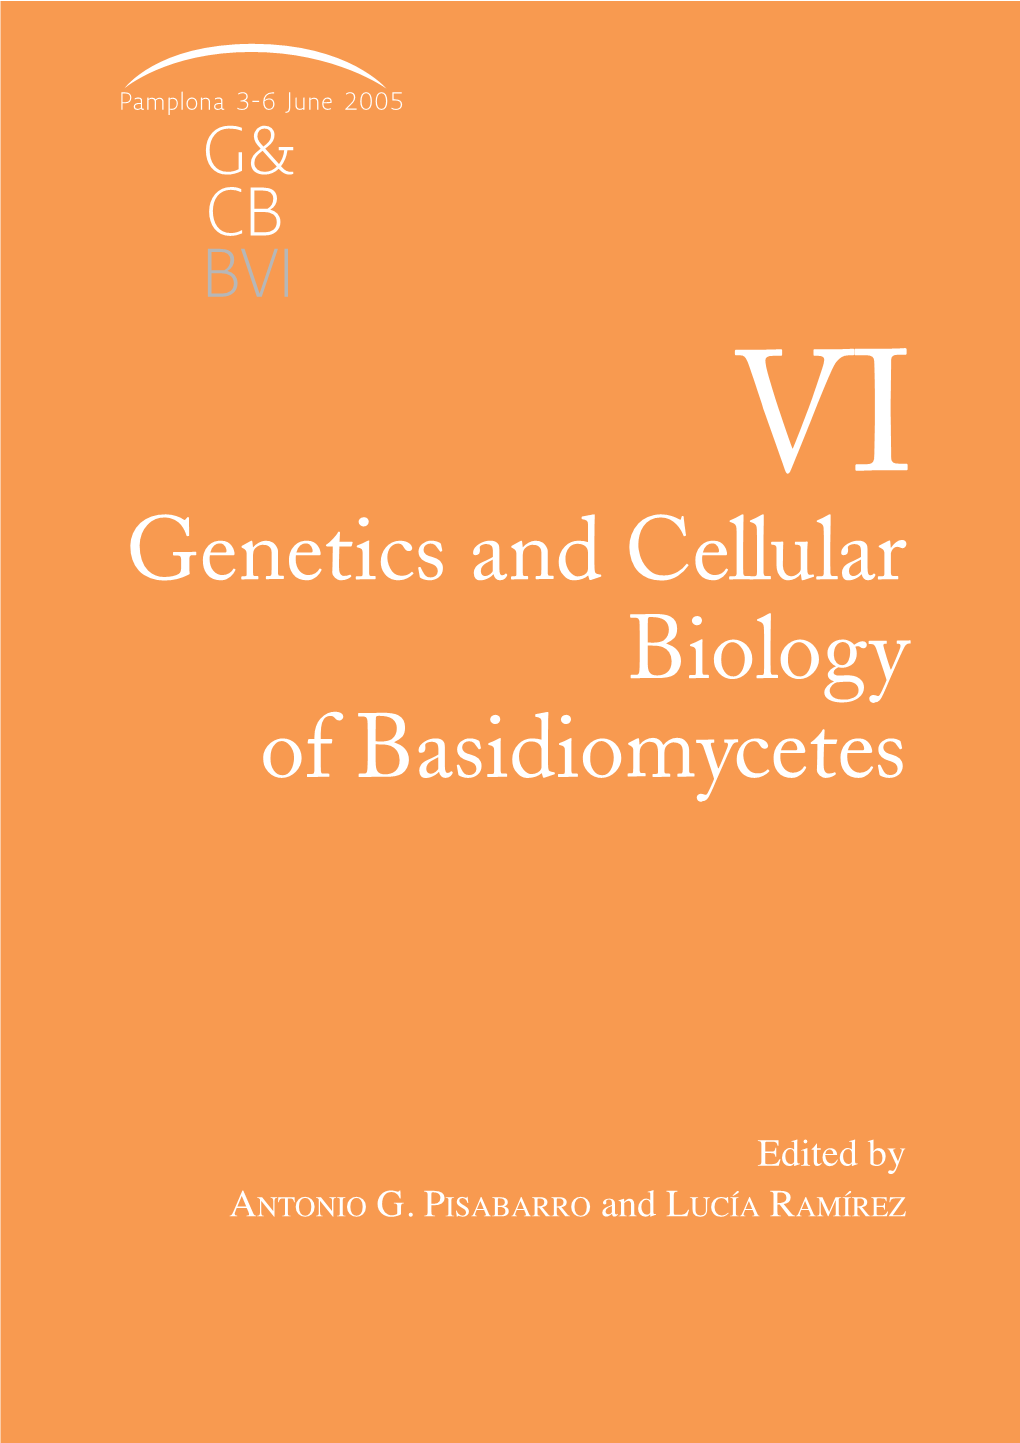 Genetics and Cellular Biology of Basidiomycetes ISBN 84–9769–107–5